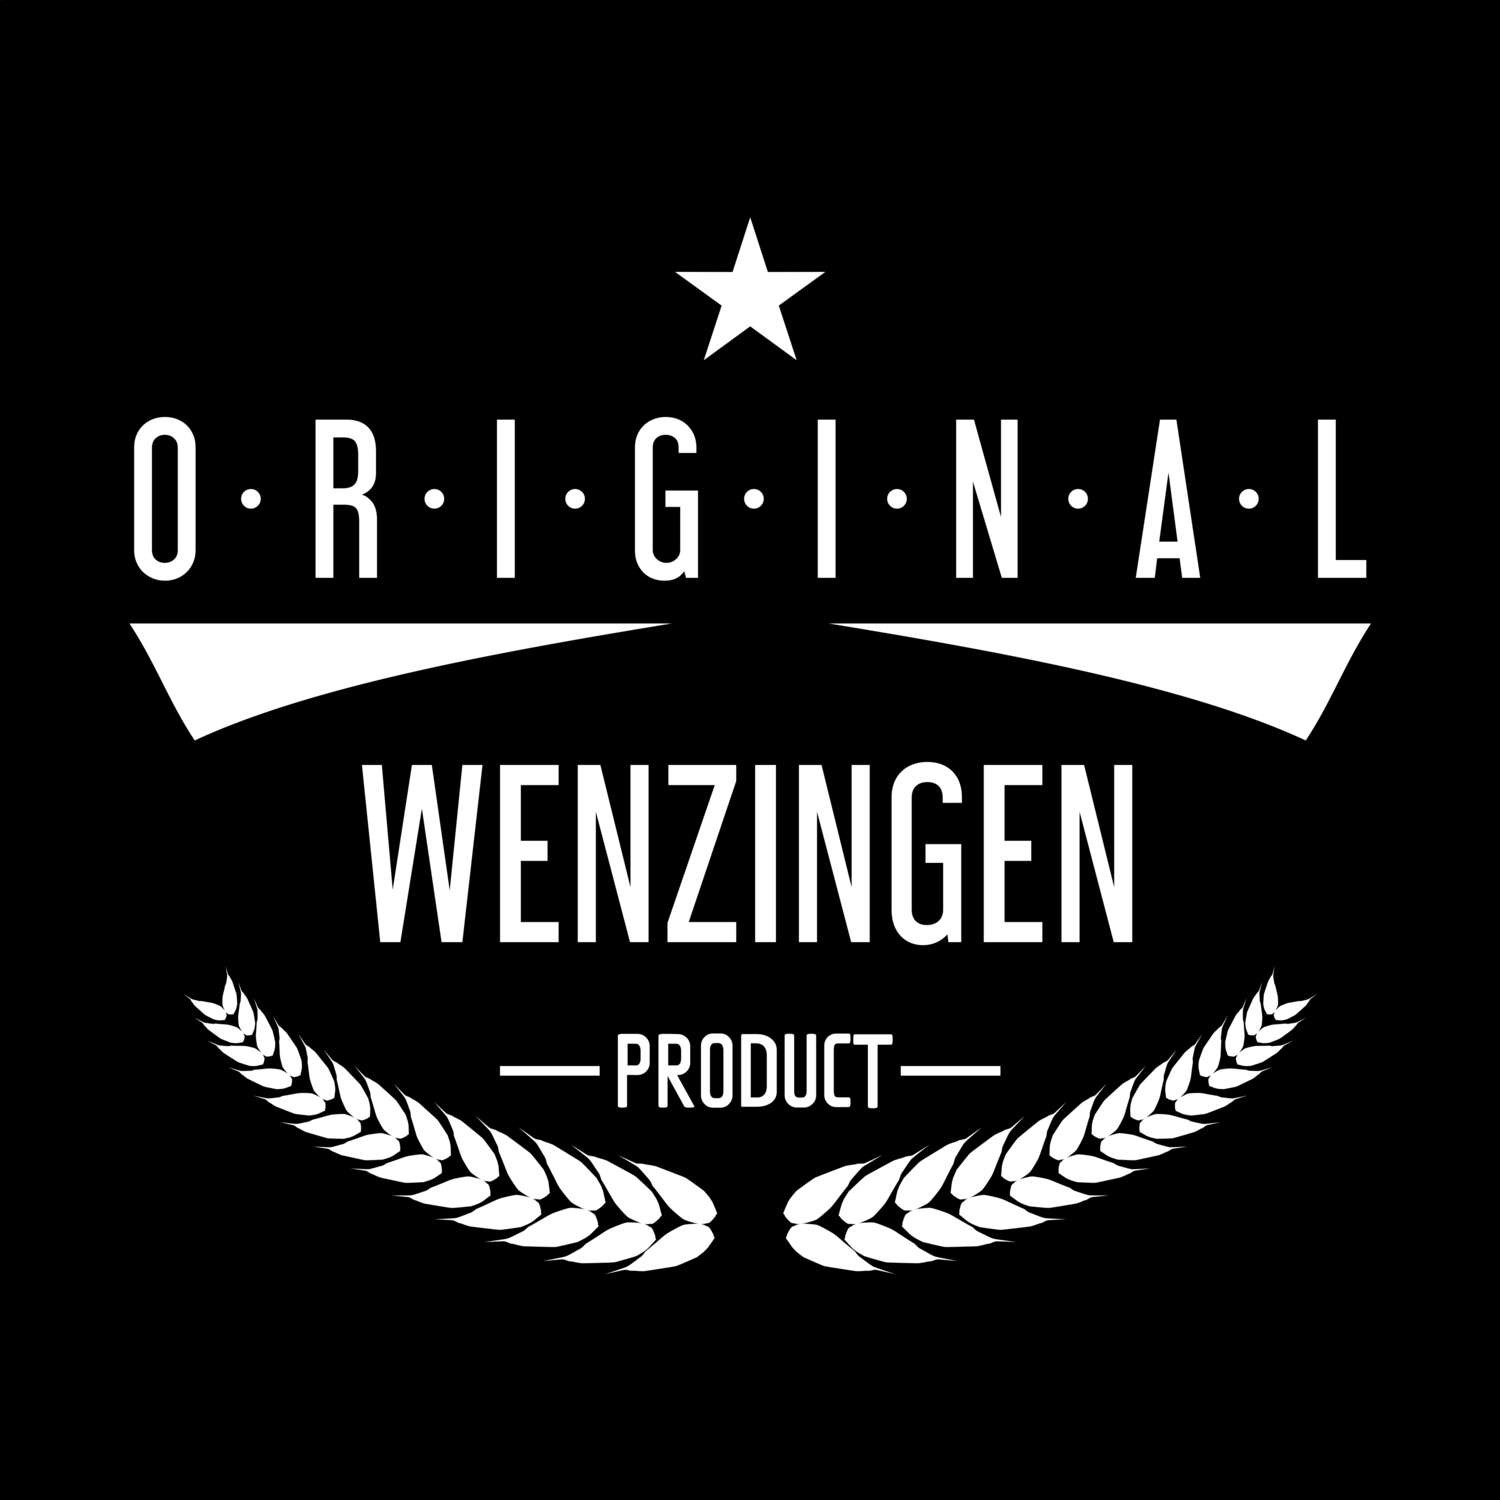 Wenzingen T-Shirt »Original Product«